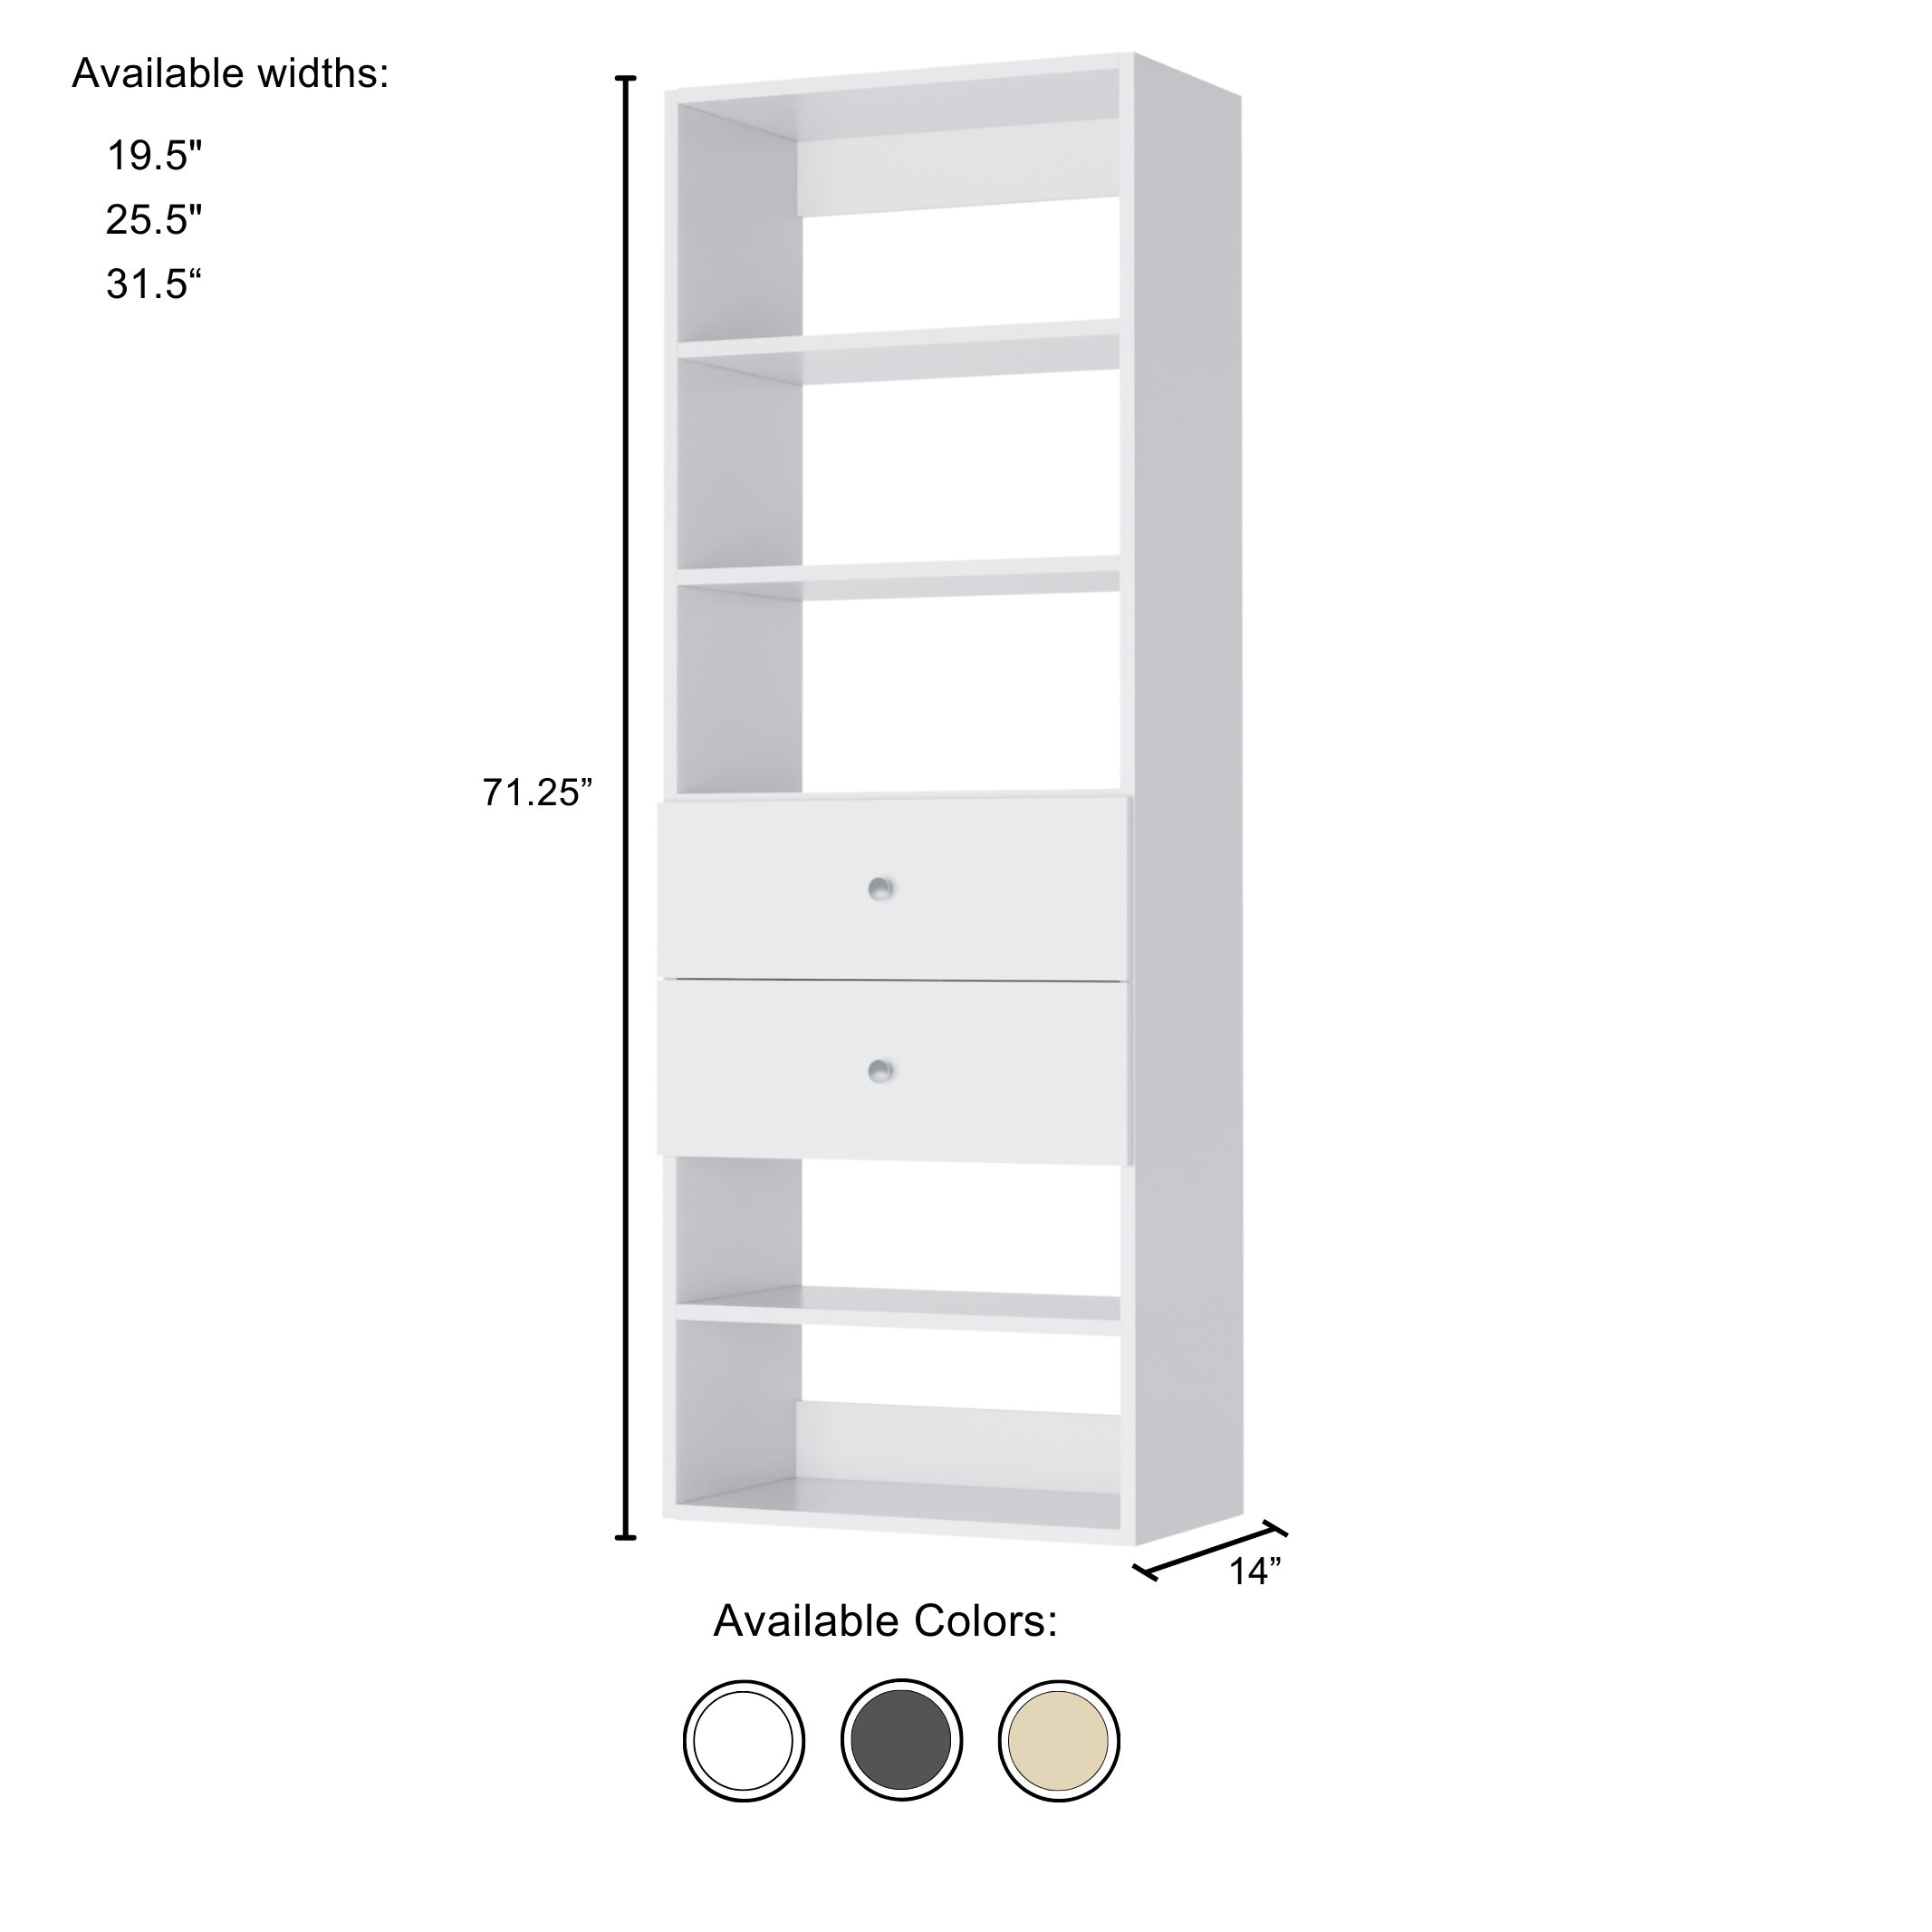 CLOS-IT W-303 Modular Closet Storage